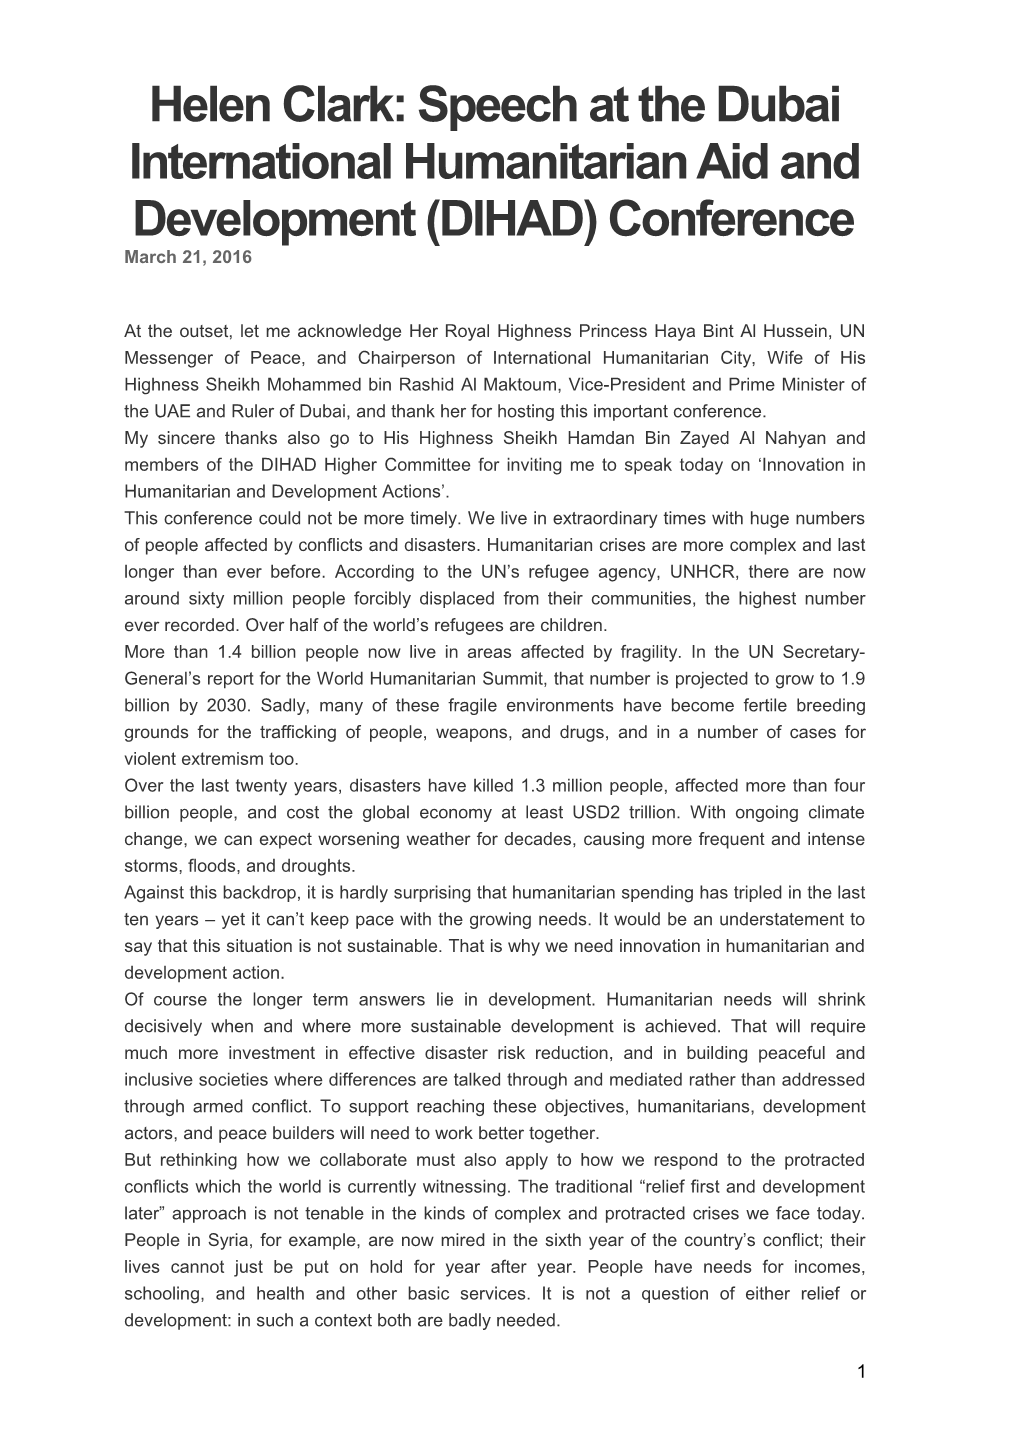 Helen Clark: Speech at the Dubai International Humanitarian Aid and Development (DIHAD)